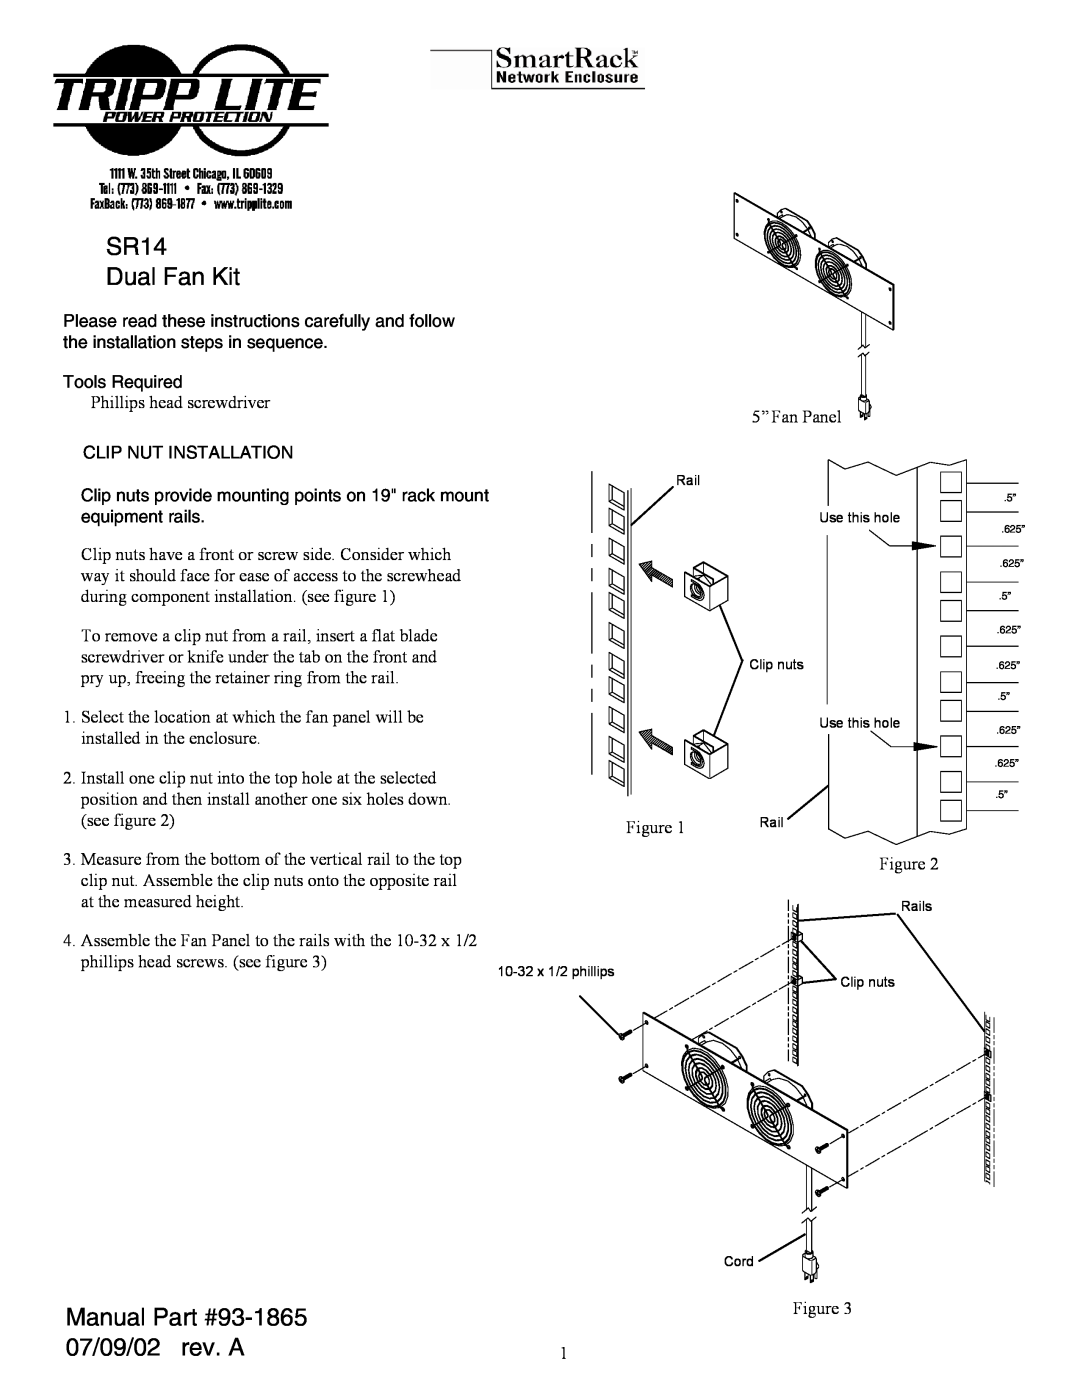 Tripp Lite MKH 800 P 48 manual SR14 Dual Fan Kit, Manual, 07/09/02 rev. A, Tools Required, Clip Nut Installation 